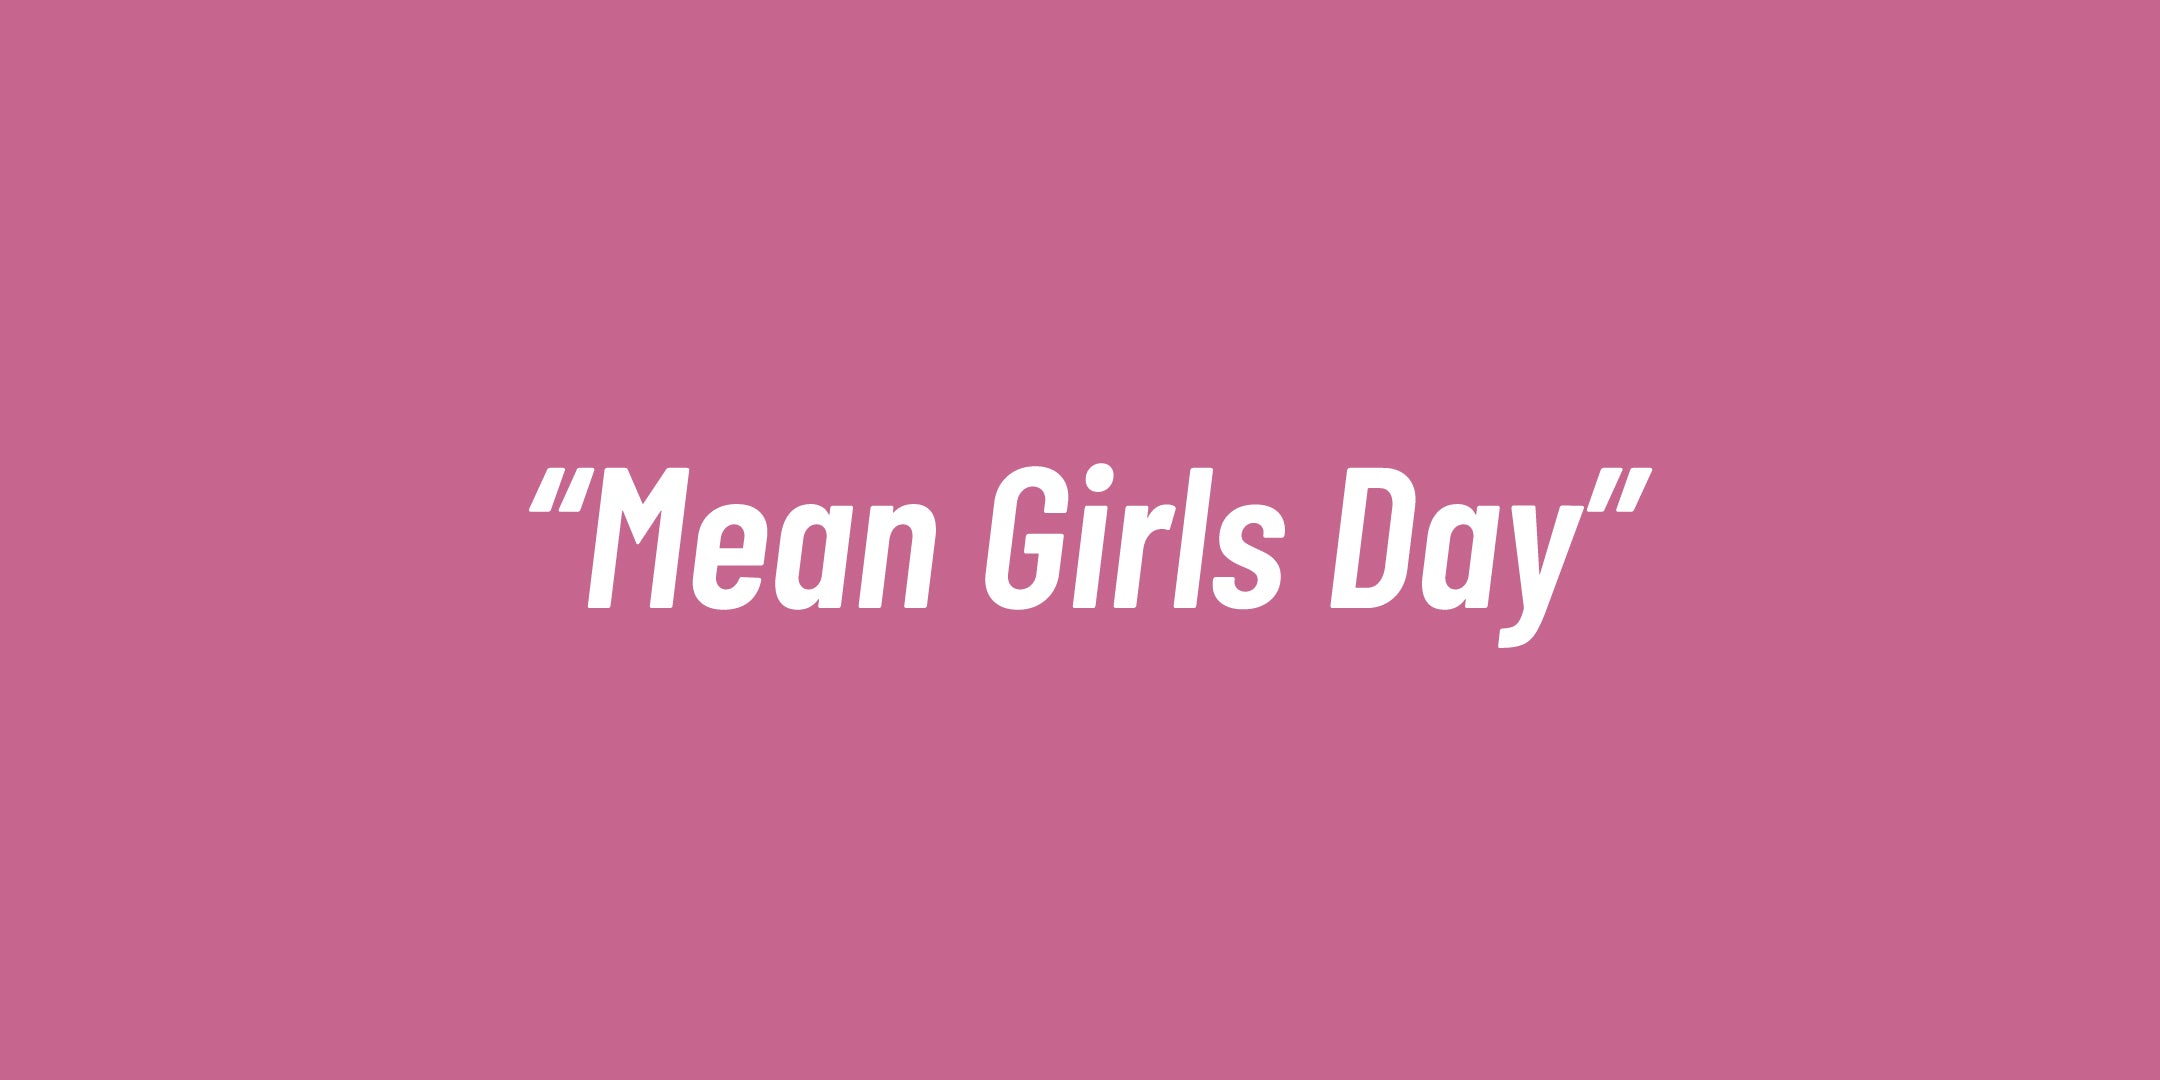 Mean Girls Day